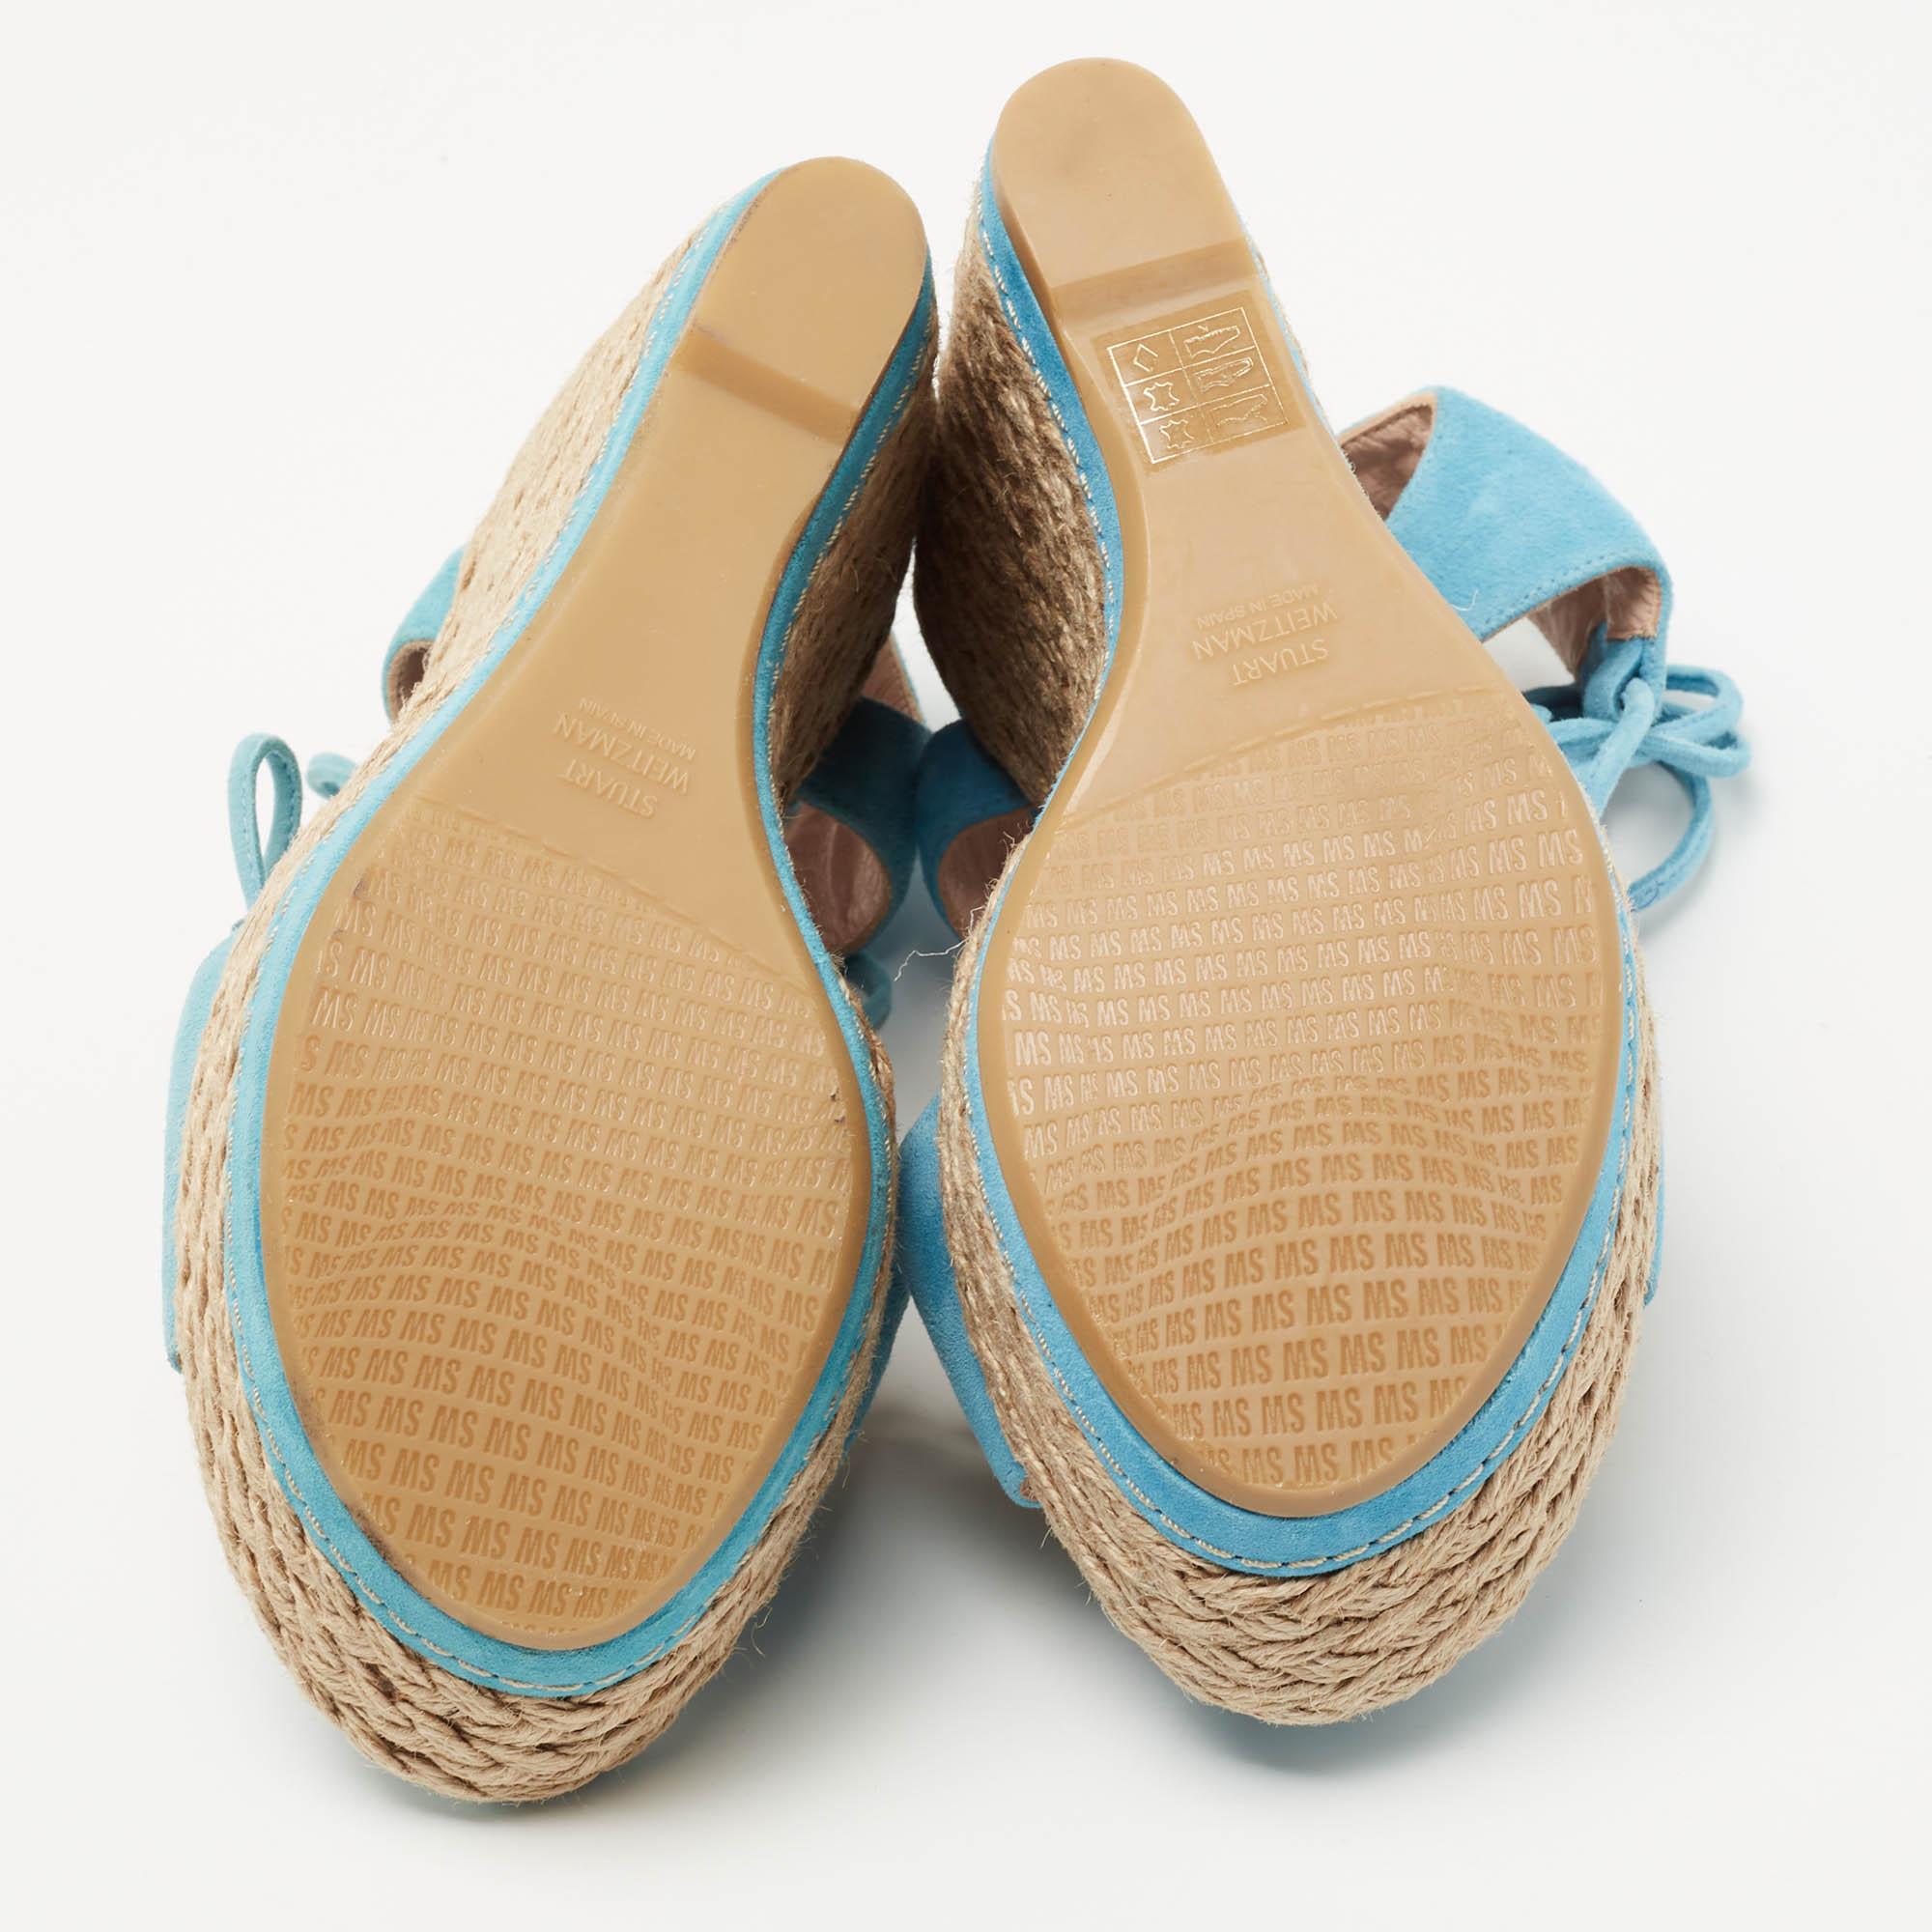 Stuart Weitzman Blue Suede Lace Up Wedge Sandals Size 36